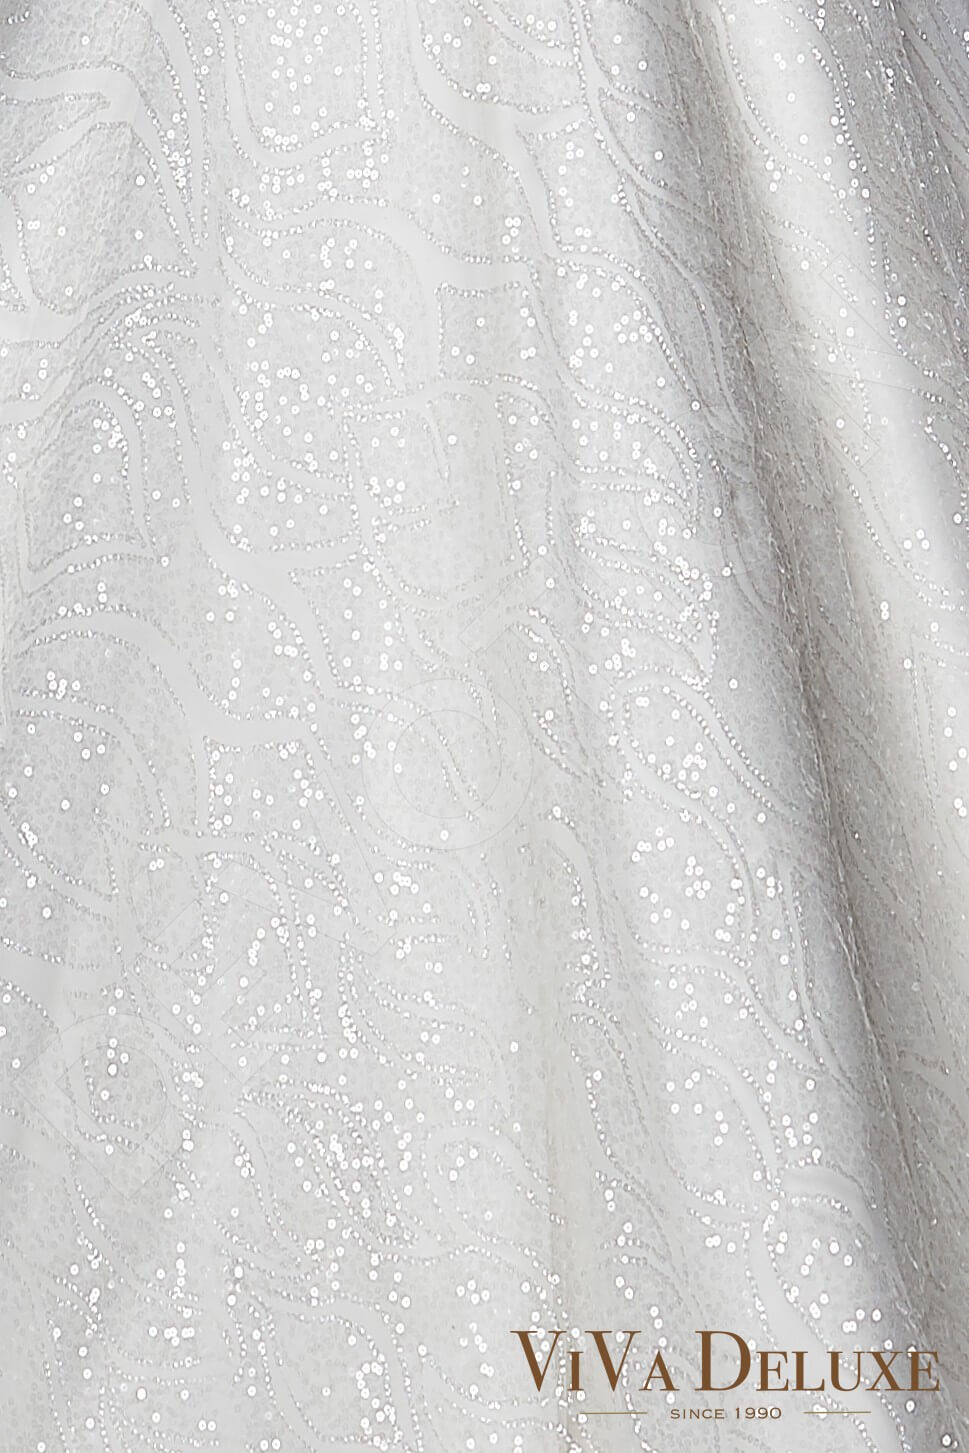 Emerie Princess/Ball Gown V-neck Ivory Wedding dress